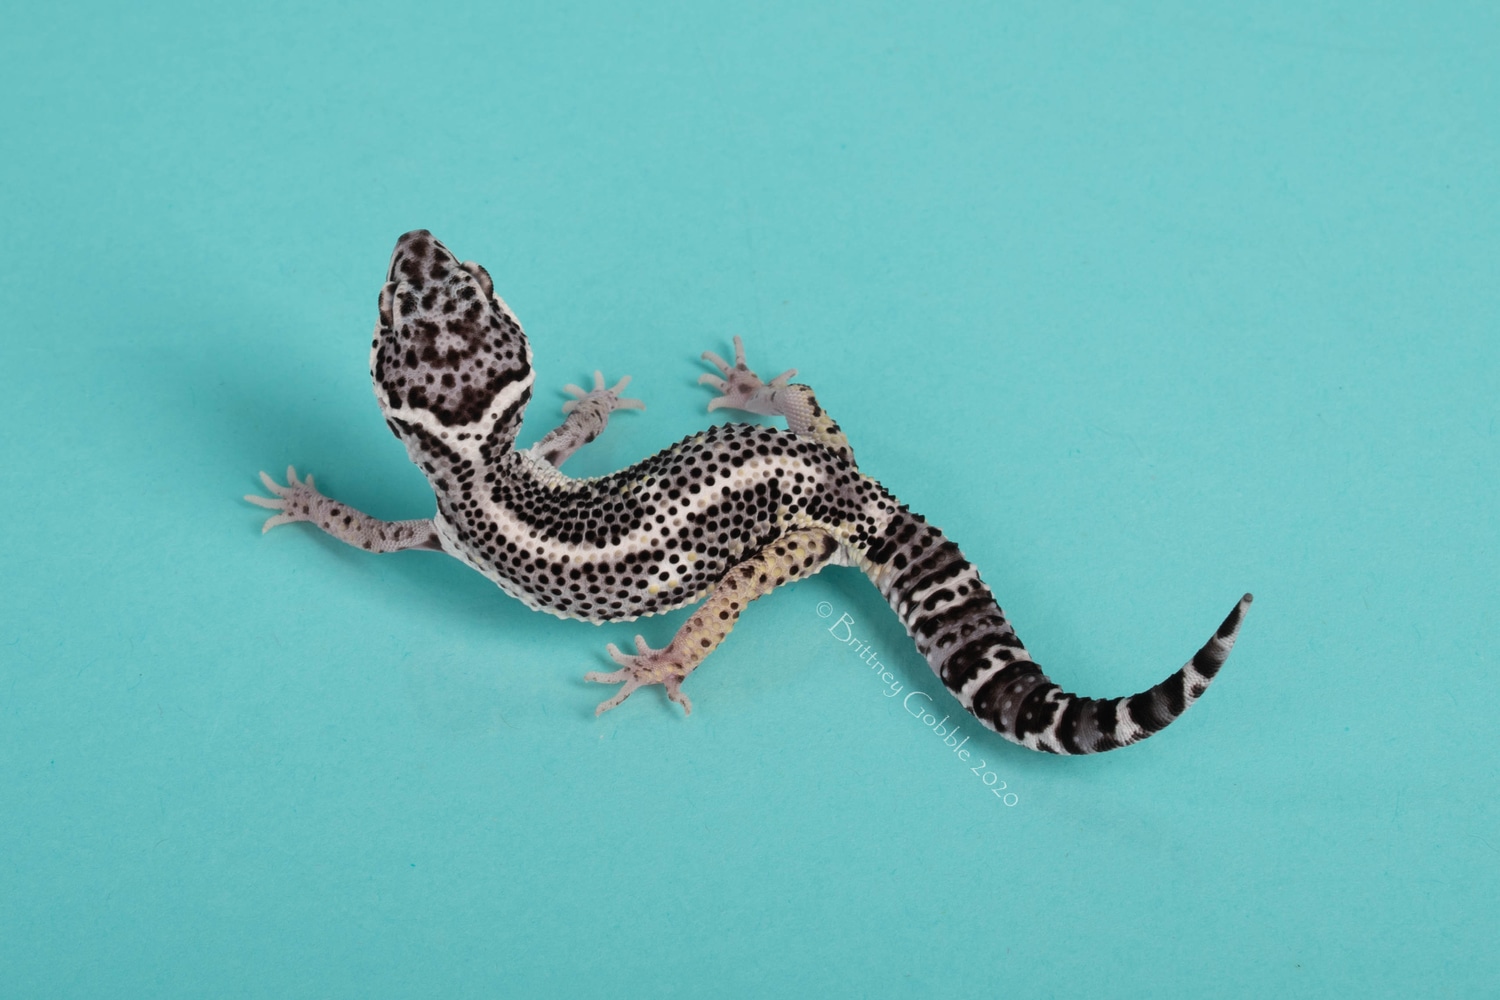 Black Night Snow Lemon Frost PH T. Albino LG200604IM2 Leopard Gecko by Gobble’s Reptiles